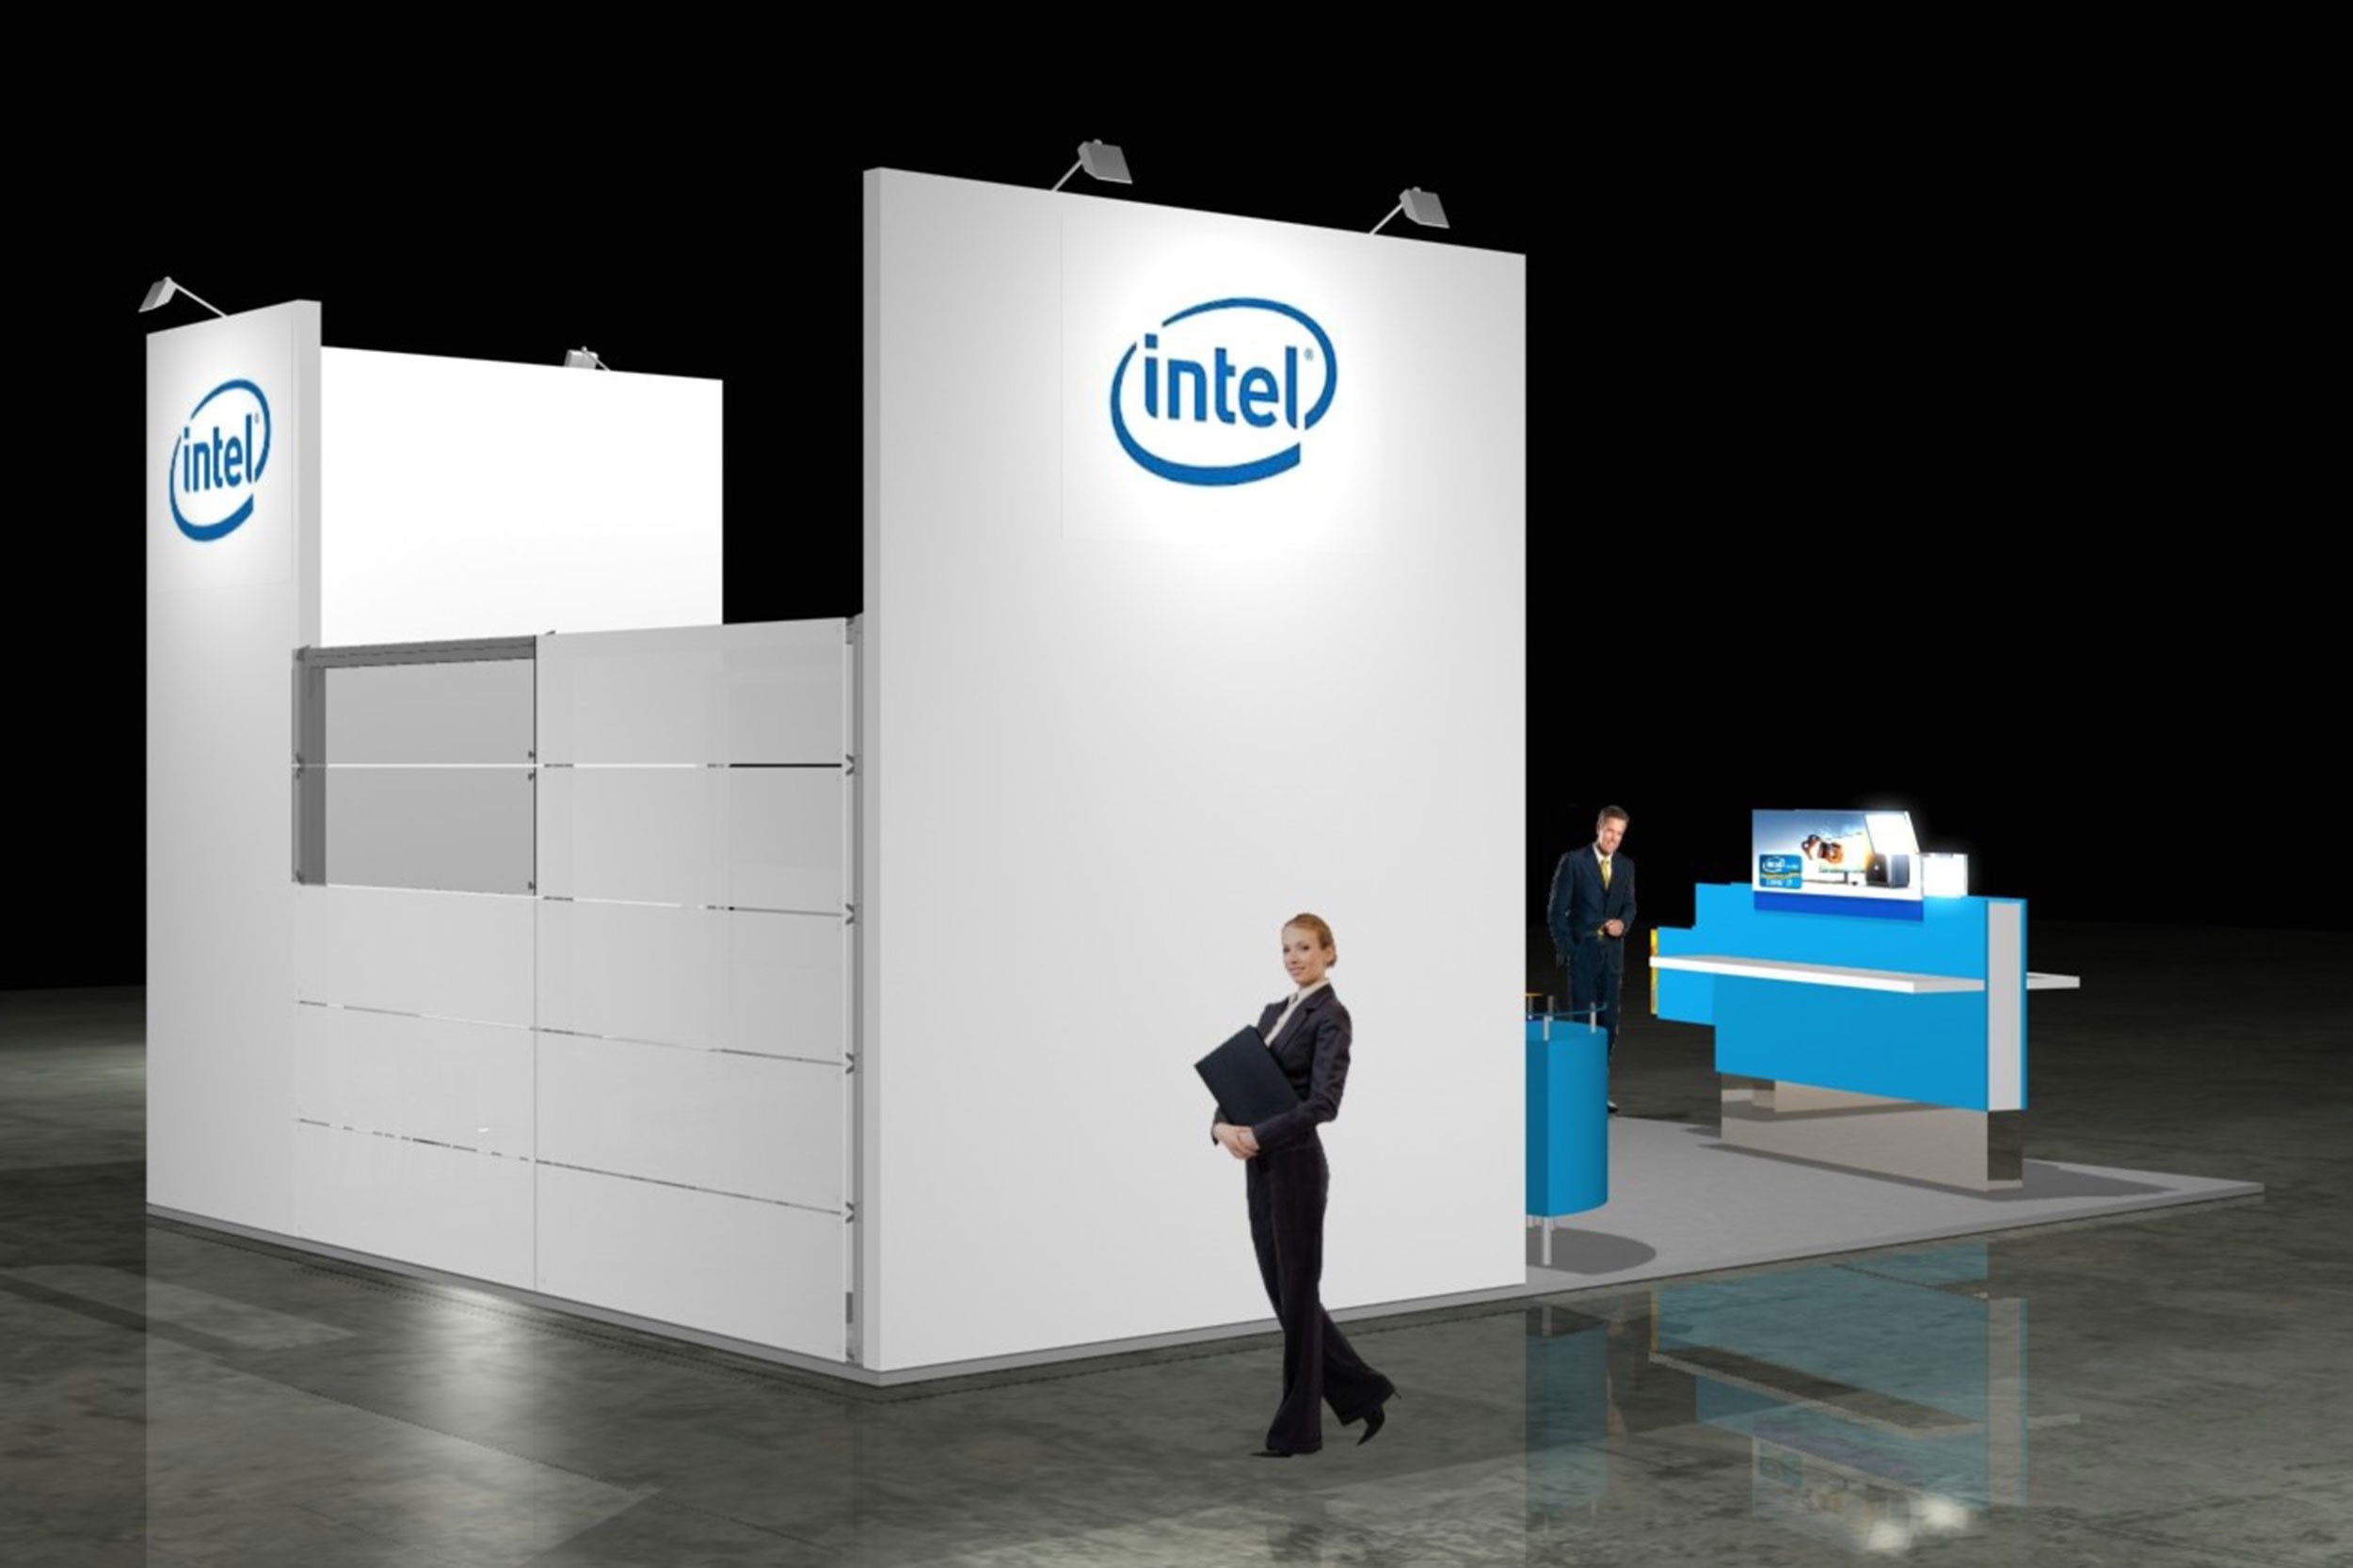 Intel Events & Exhibitions